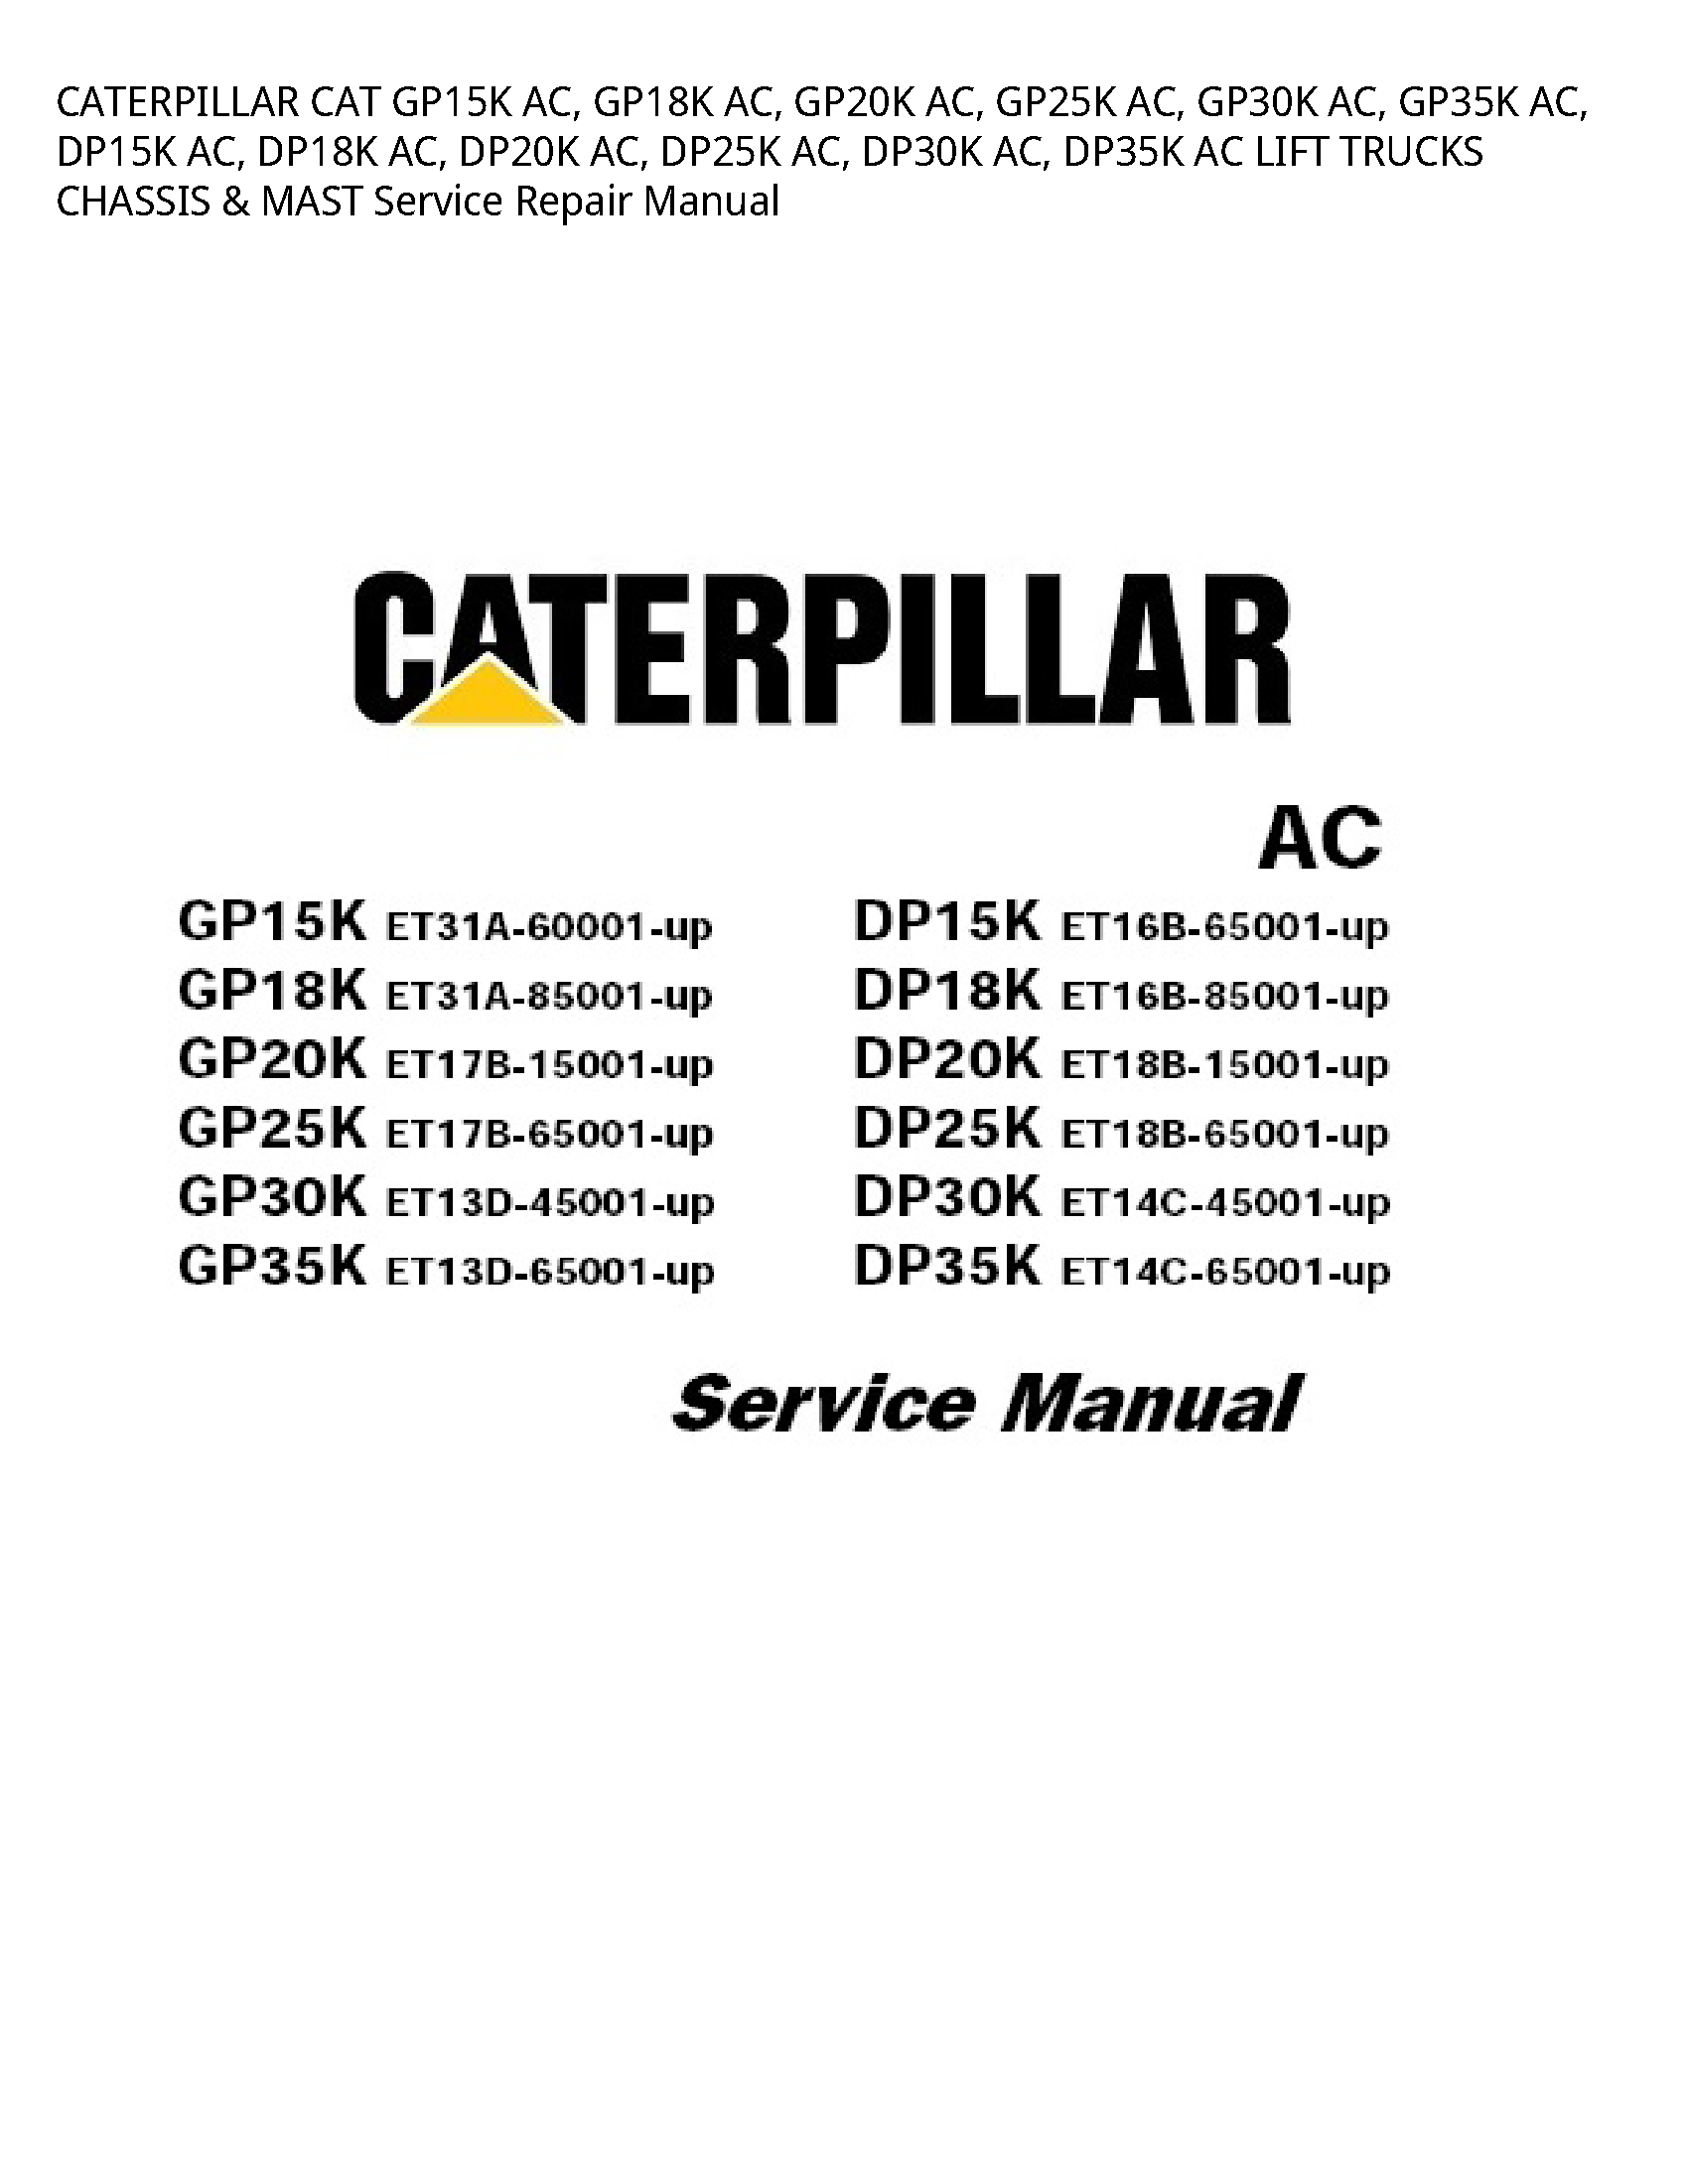 Caterpillar GP15K CAT AC manual